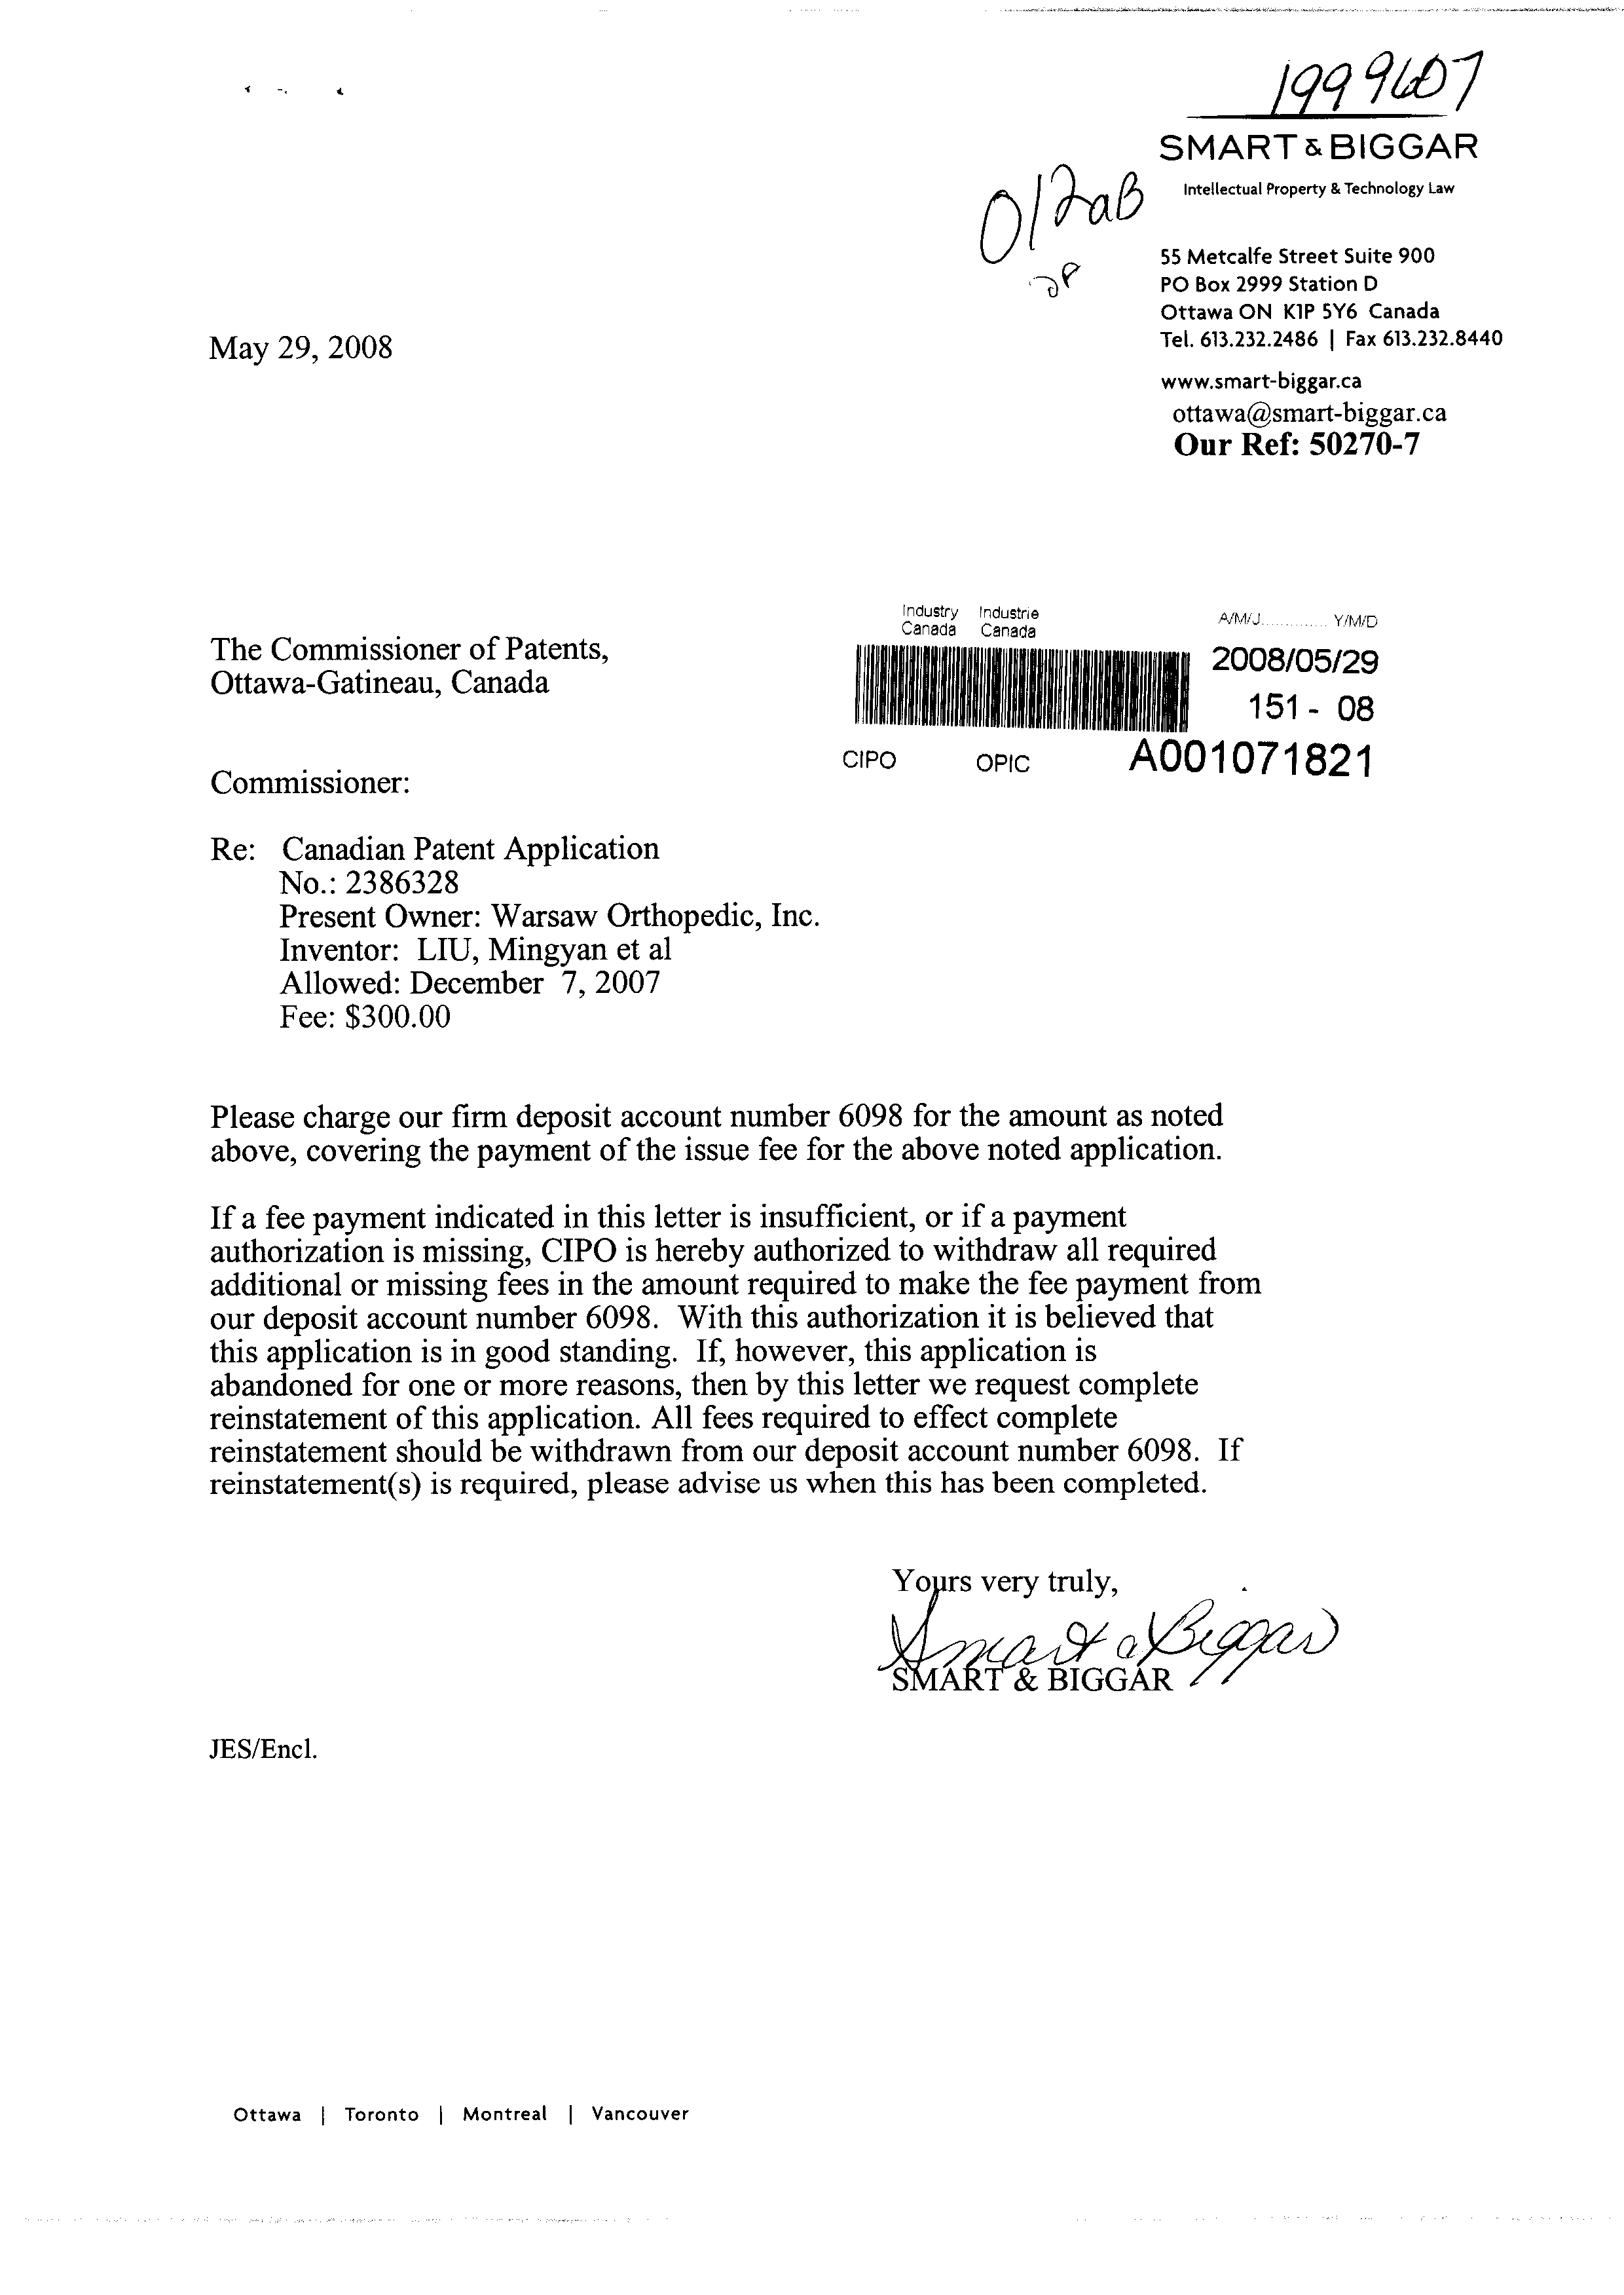 Canadian Patent Document 2386328. Correspondence 20080529. Image 1 of 1